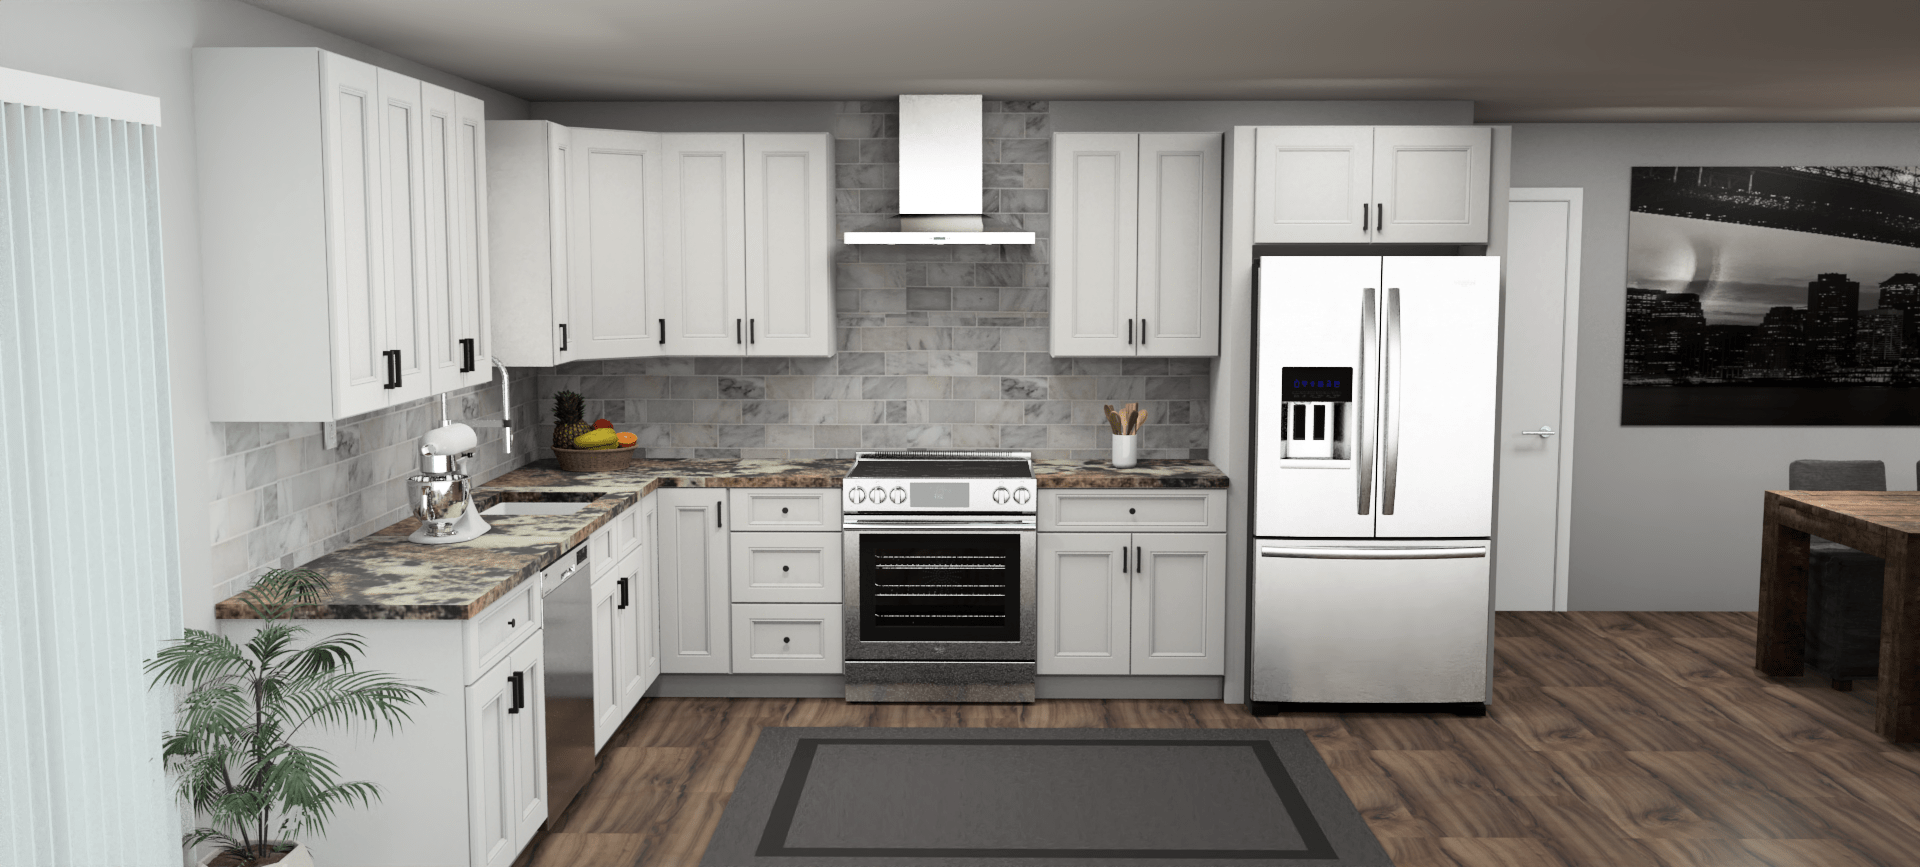 Fabuwood Allure Nexus Frost 10 x 13 L Shaped Kitchen Front Layout Photo